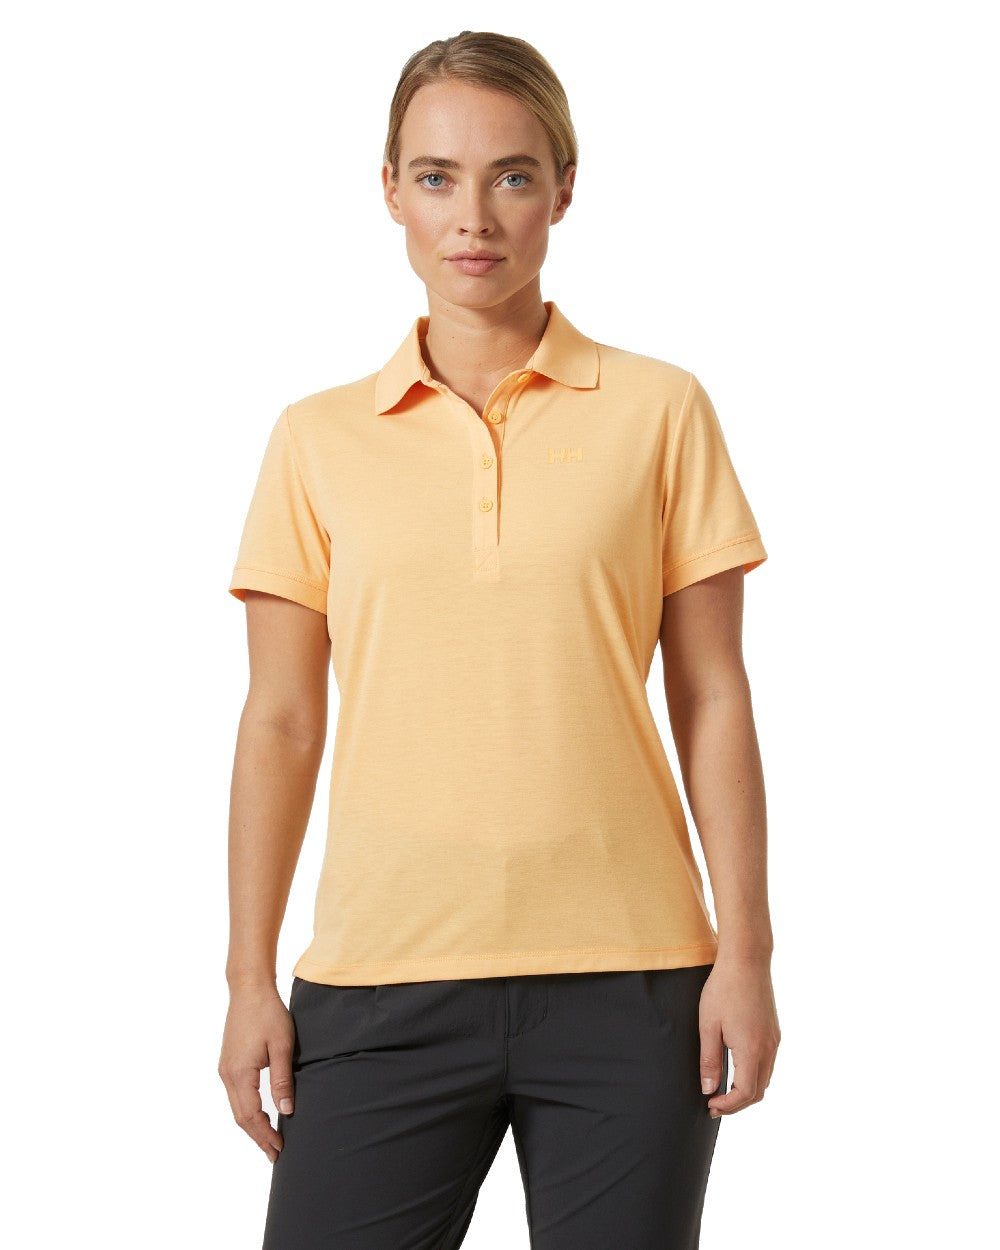 Miami Peach coloured Helly Hansen Womens Siren Quick Dry Polo T-shirt on white background 